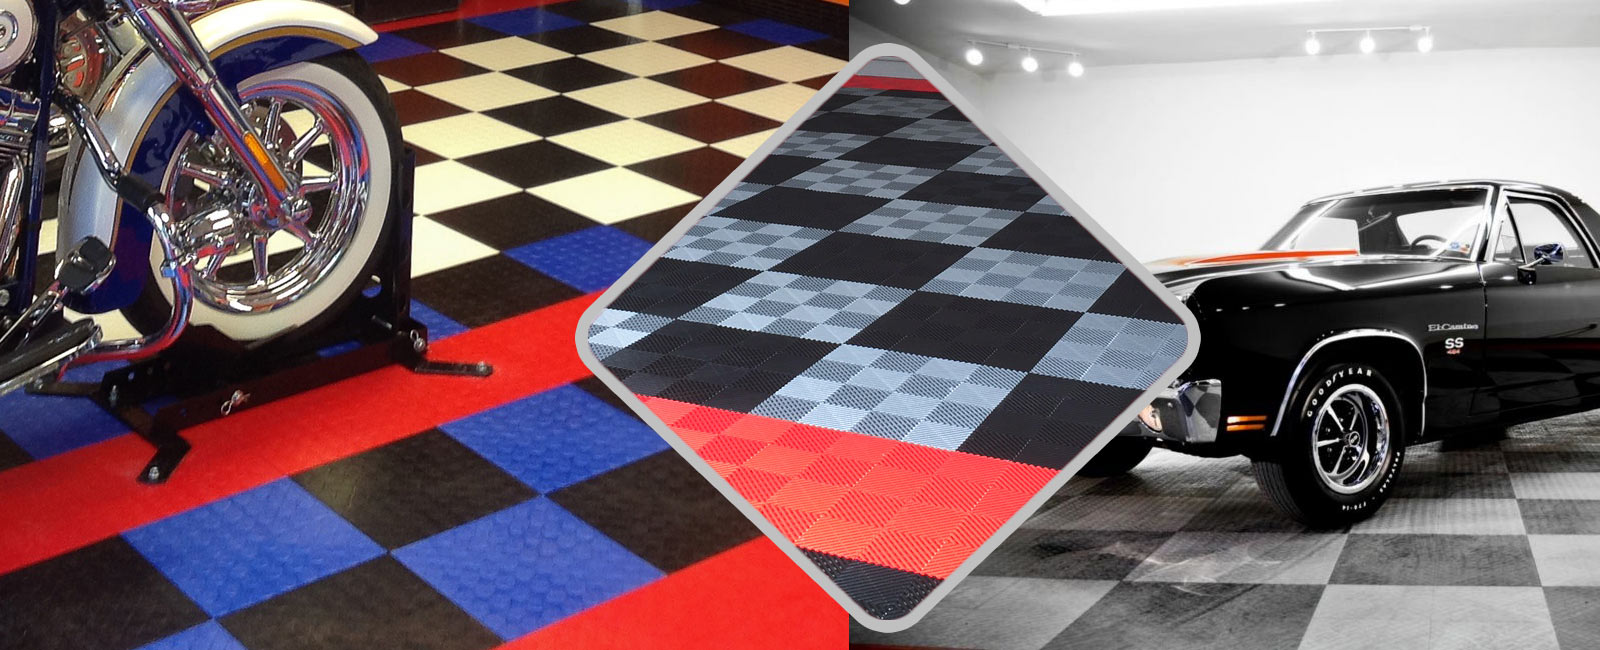 Modular Flooring For Garage Events Car Shows Racedeck Snaplock